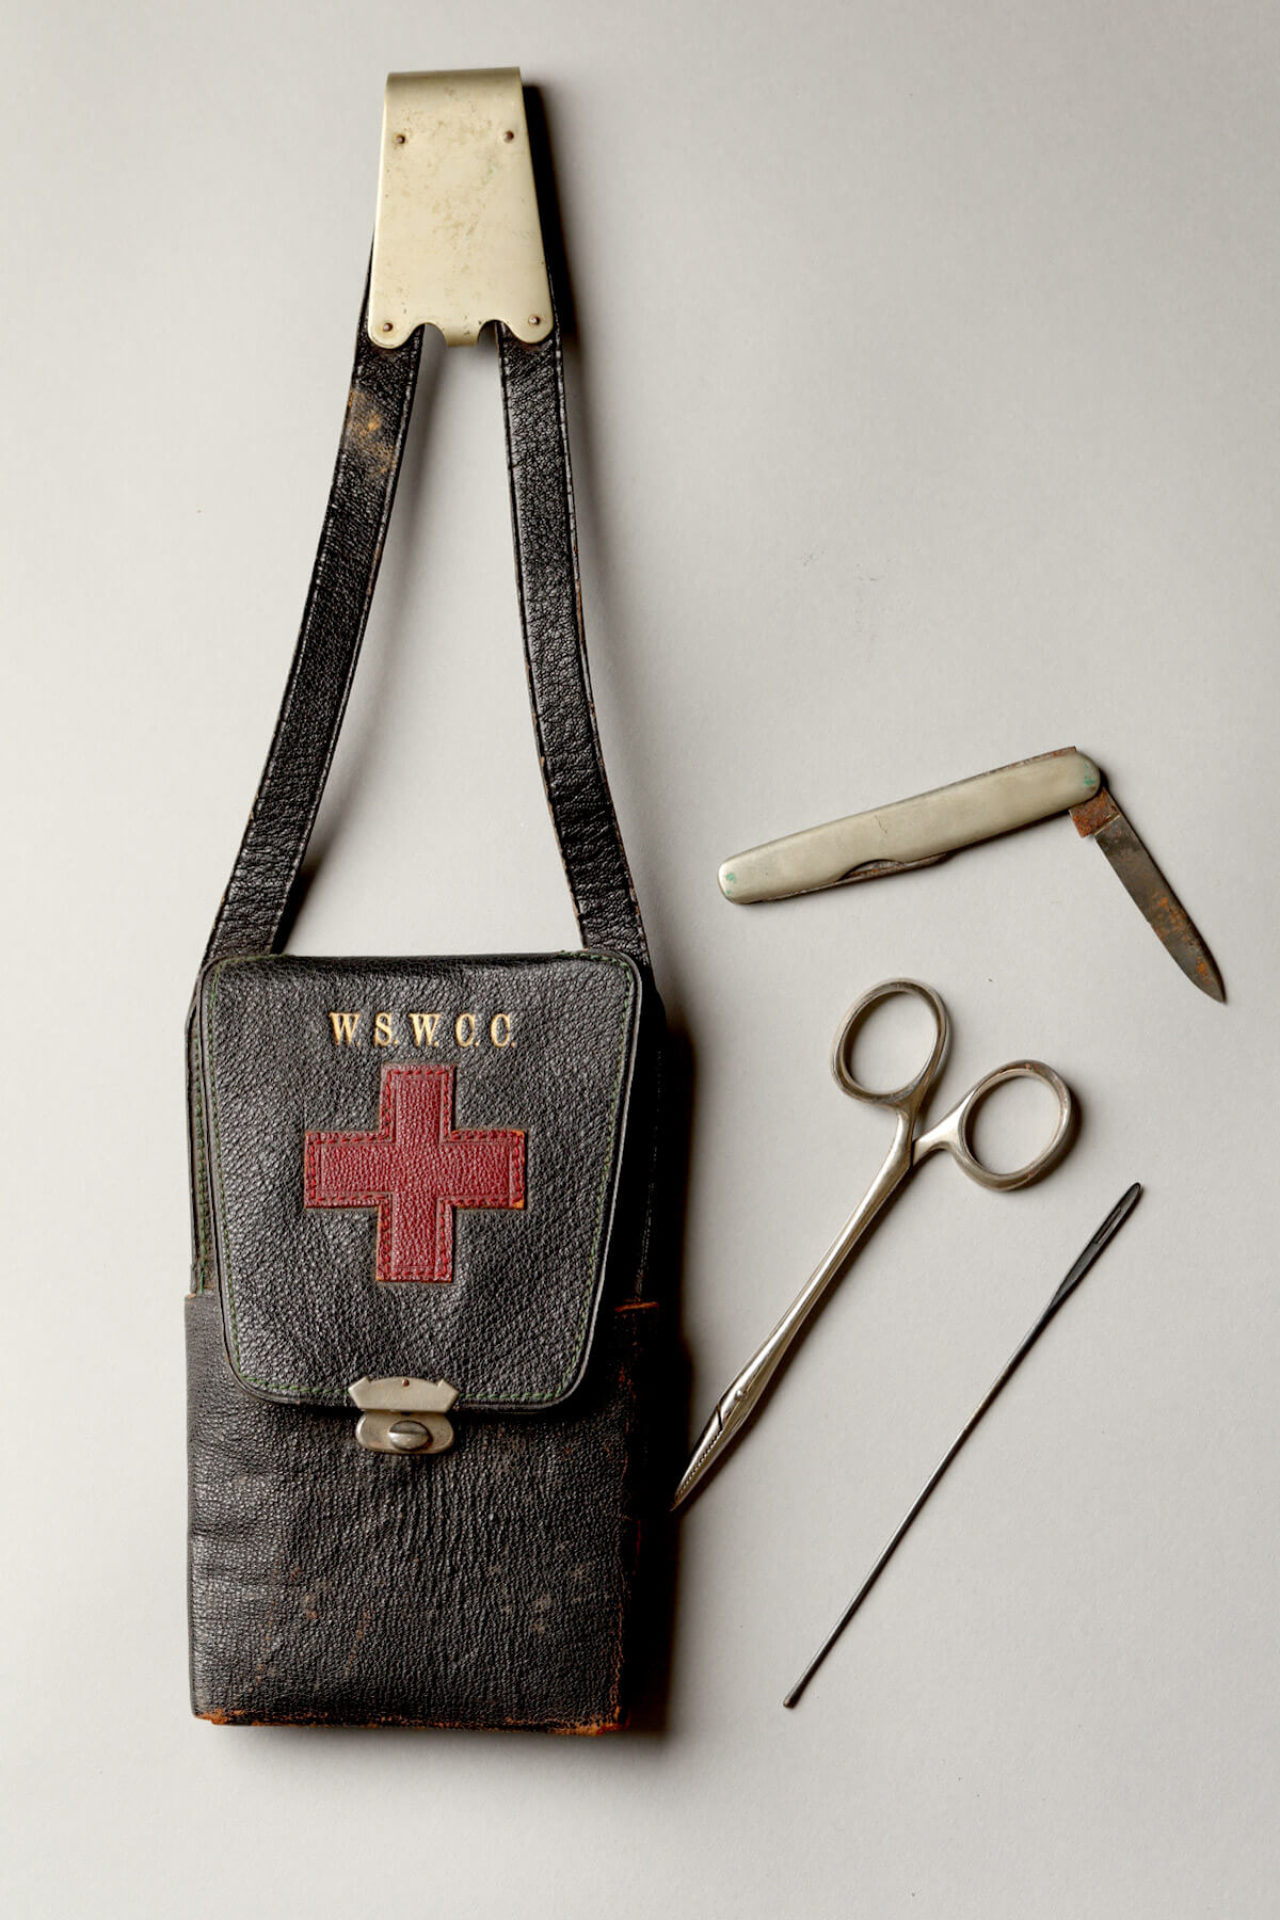 dorset-museum-objects-Mabel-Stobarts-medical-kit